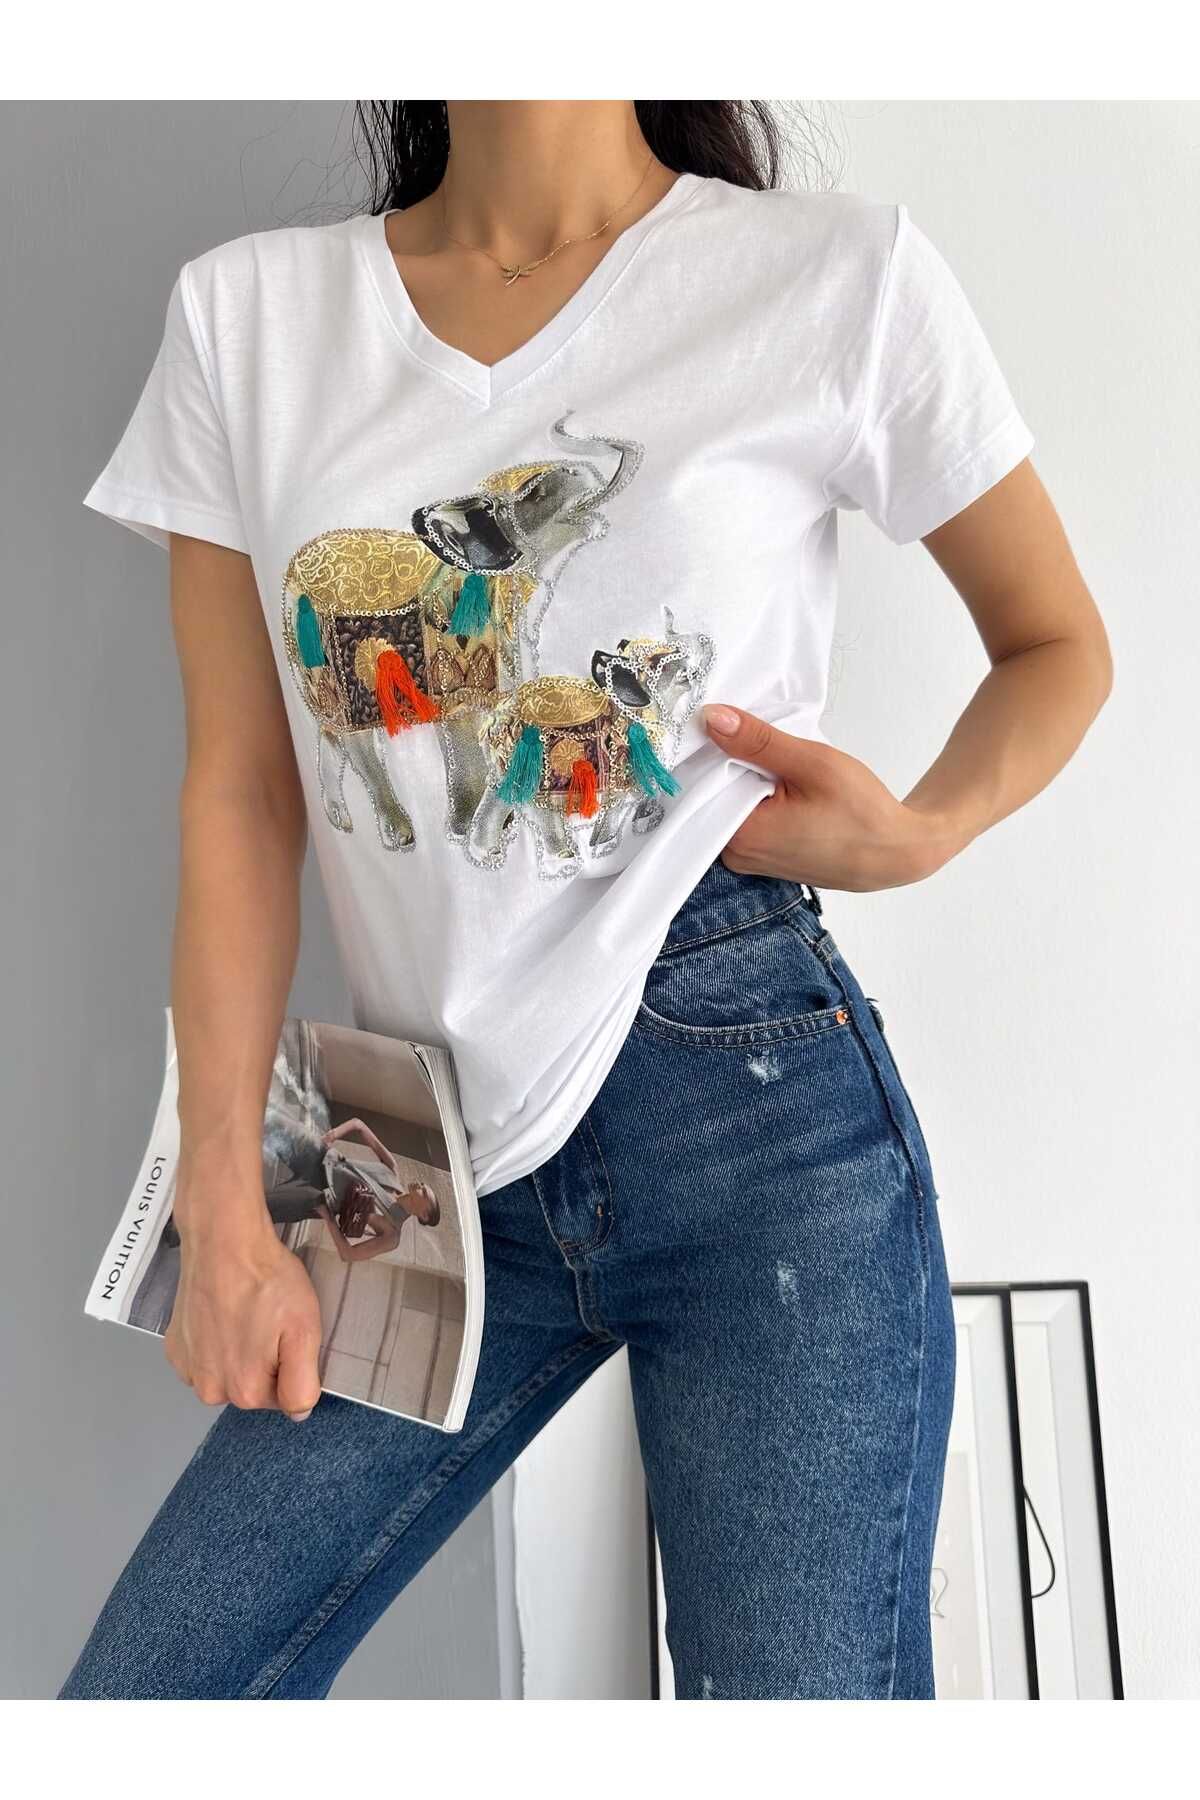 Esra Butik Hane Kadın V Yaka 2'li Fil Desen Püsküllü Pul Payet Işlemeli Pamuk T-shirt